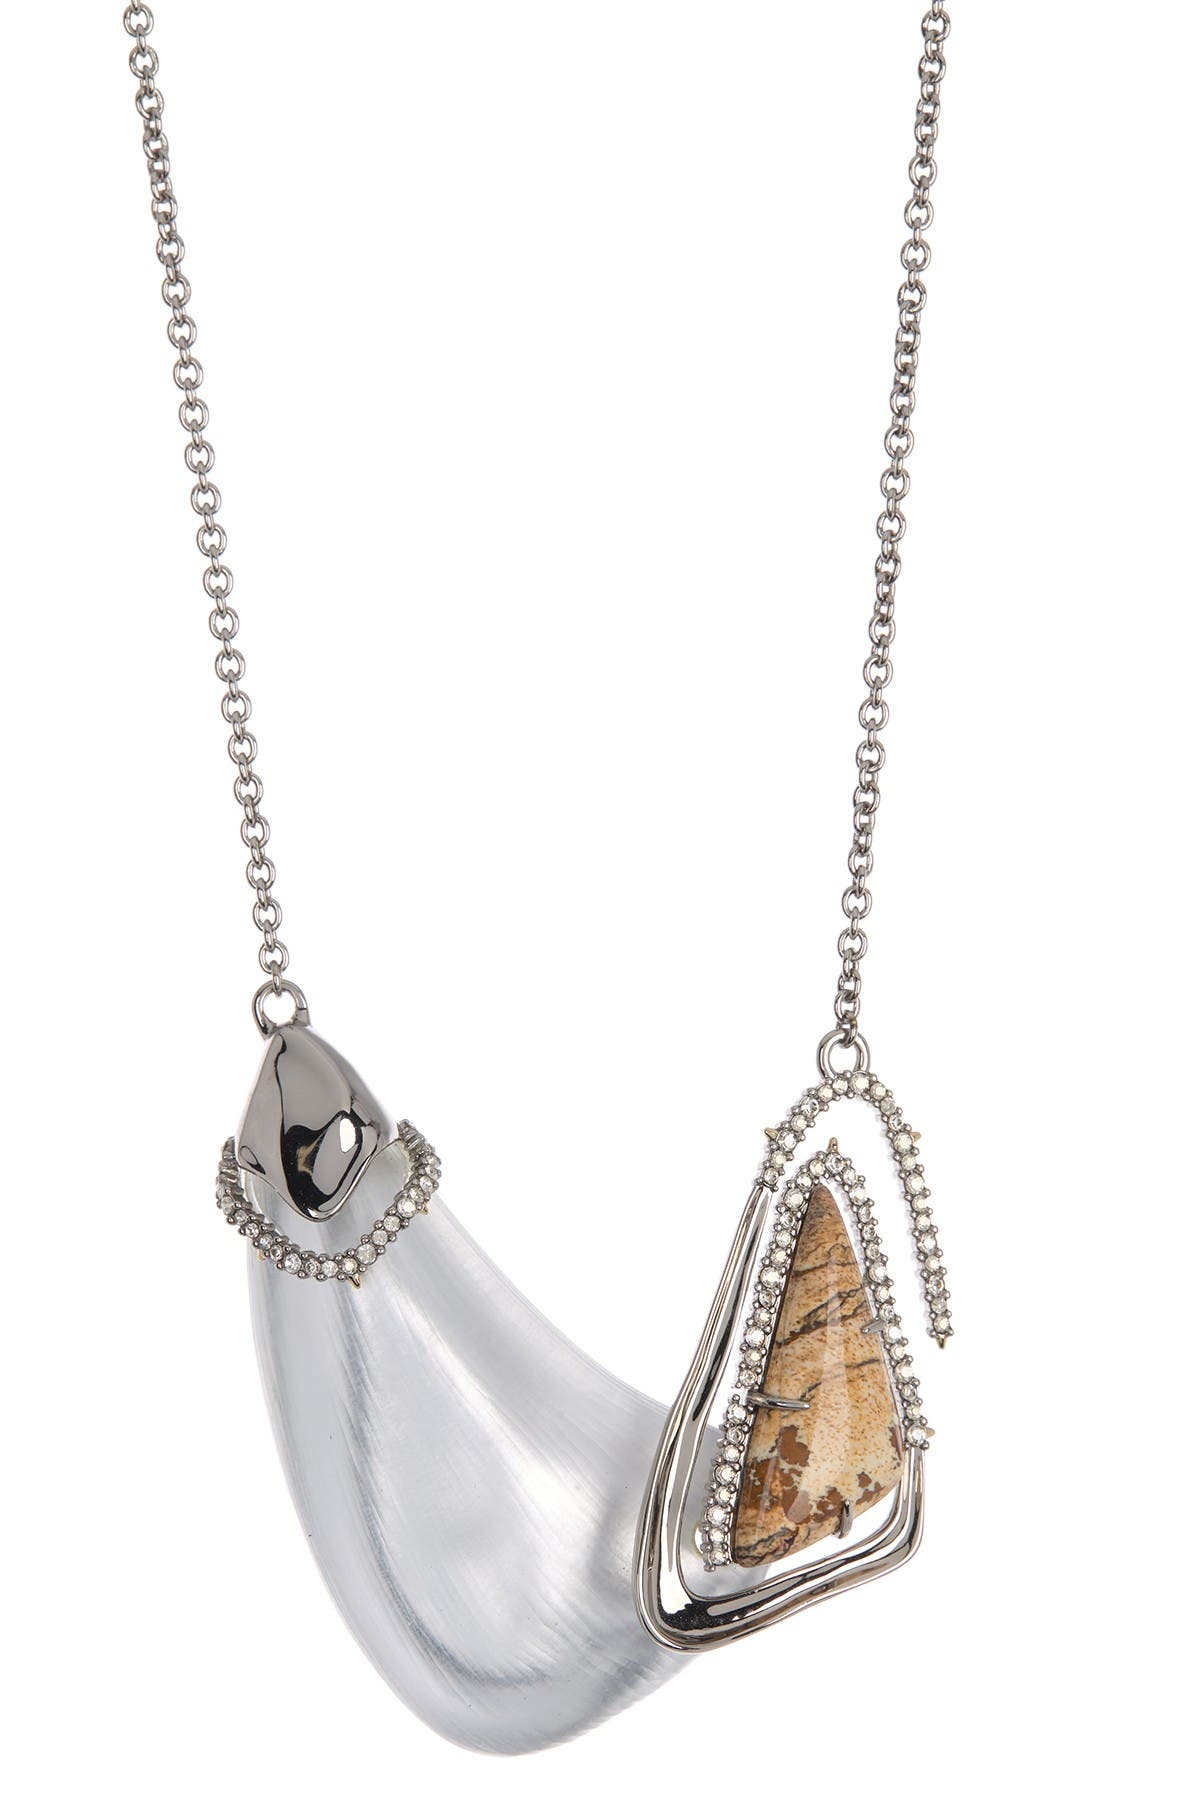 Alexis Bittar Fancy Stone Articulating Bib Necklace In Silver